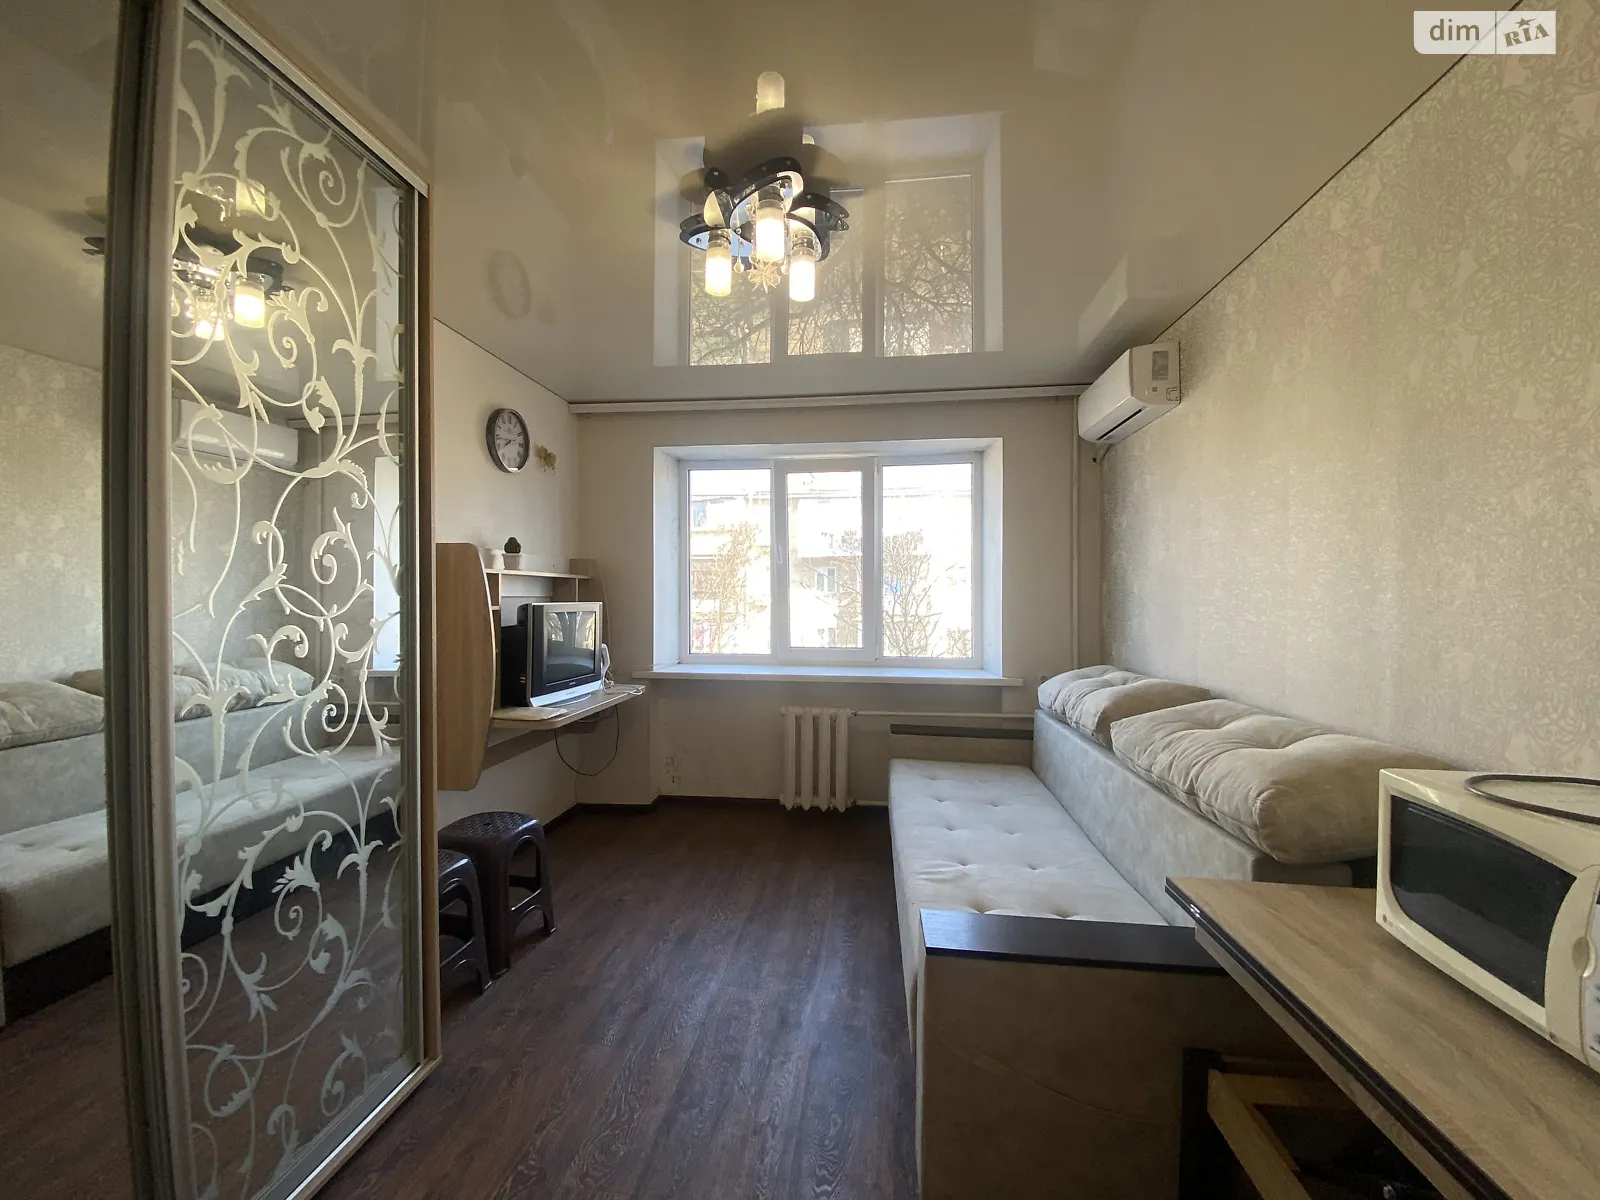 Продается комната 18 кв. м в Черноморске, цена: 10500 $ - фото 1